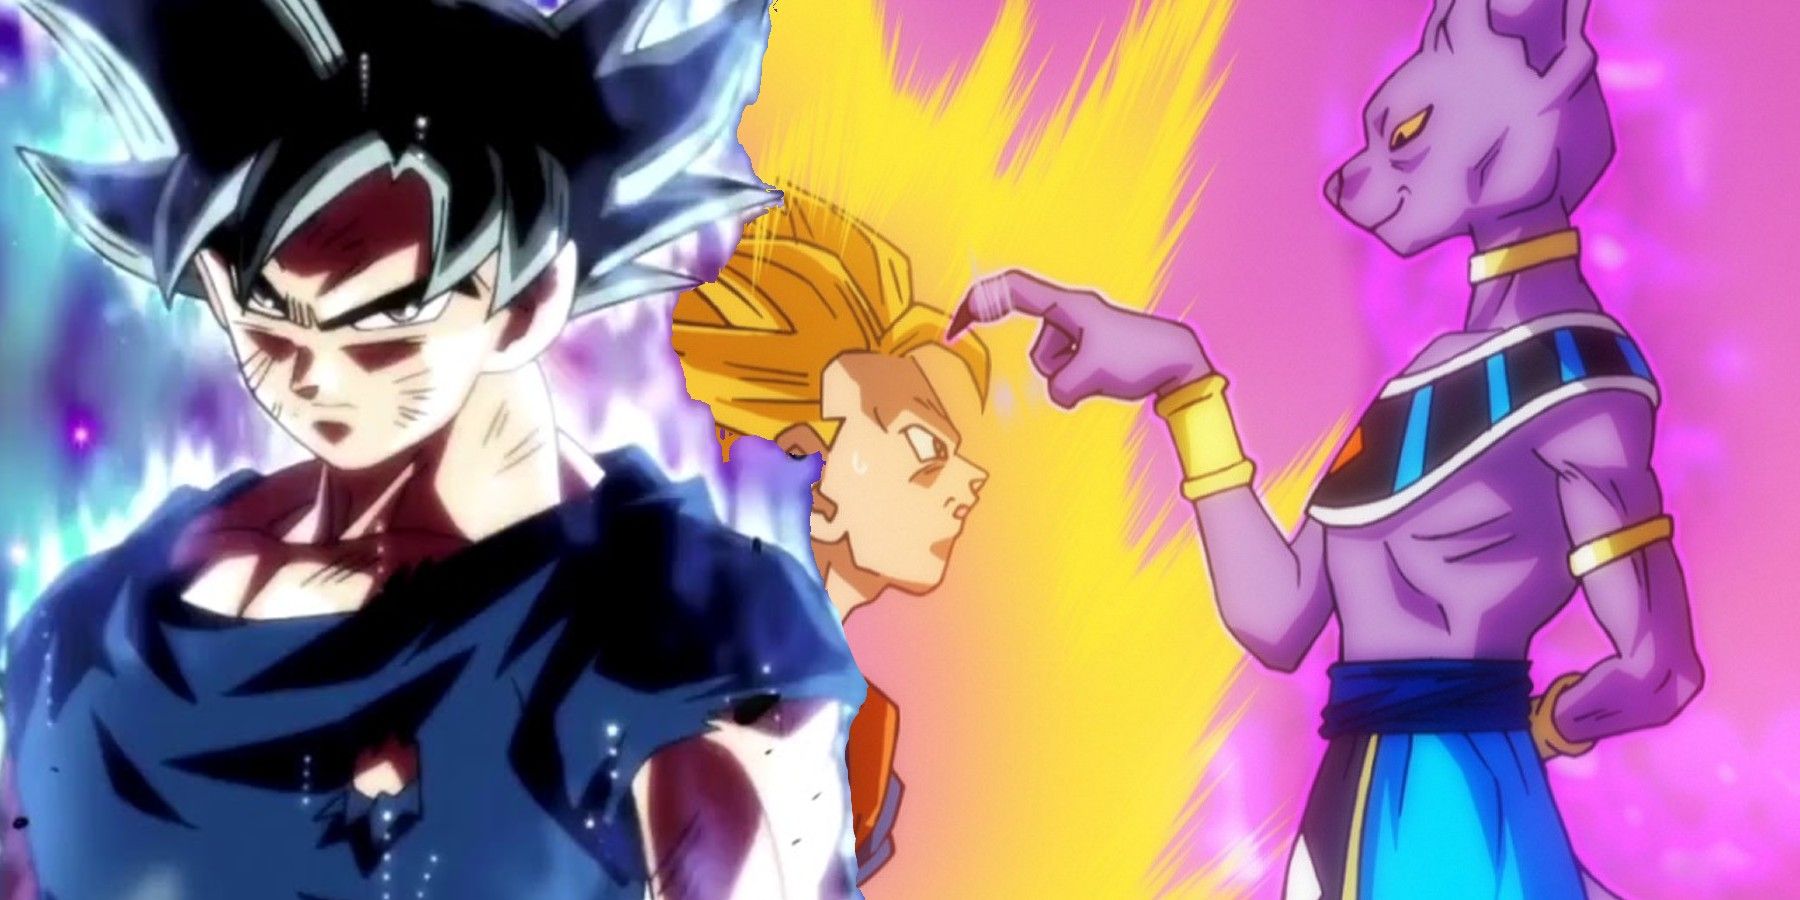 Beerus and Goku Ultra Instinct in Dragon Ball Super